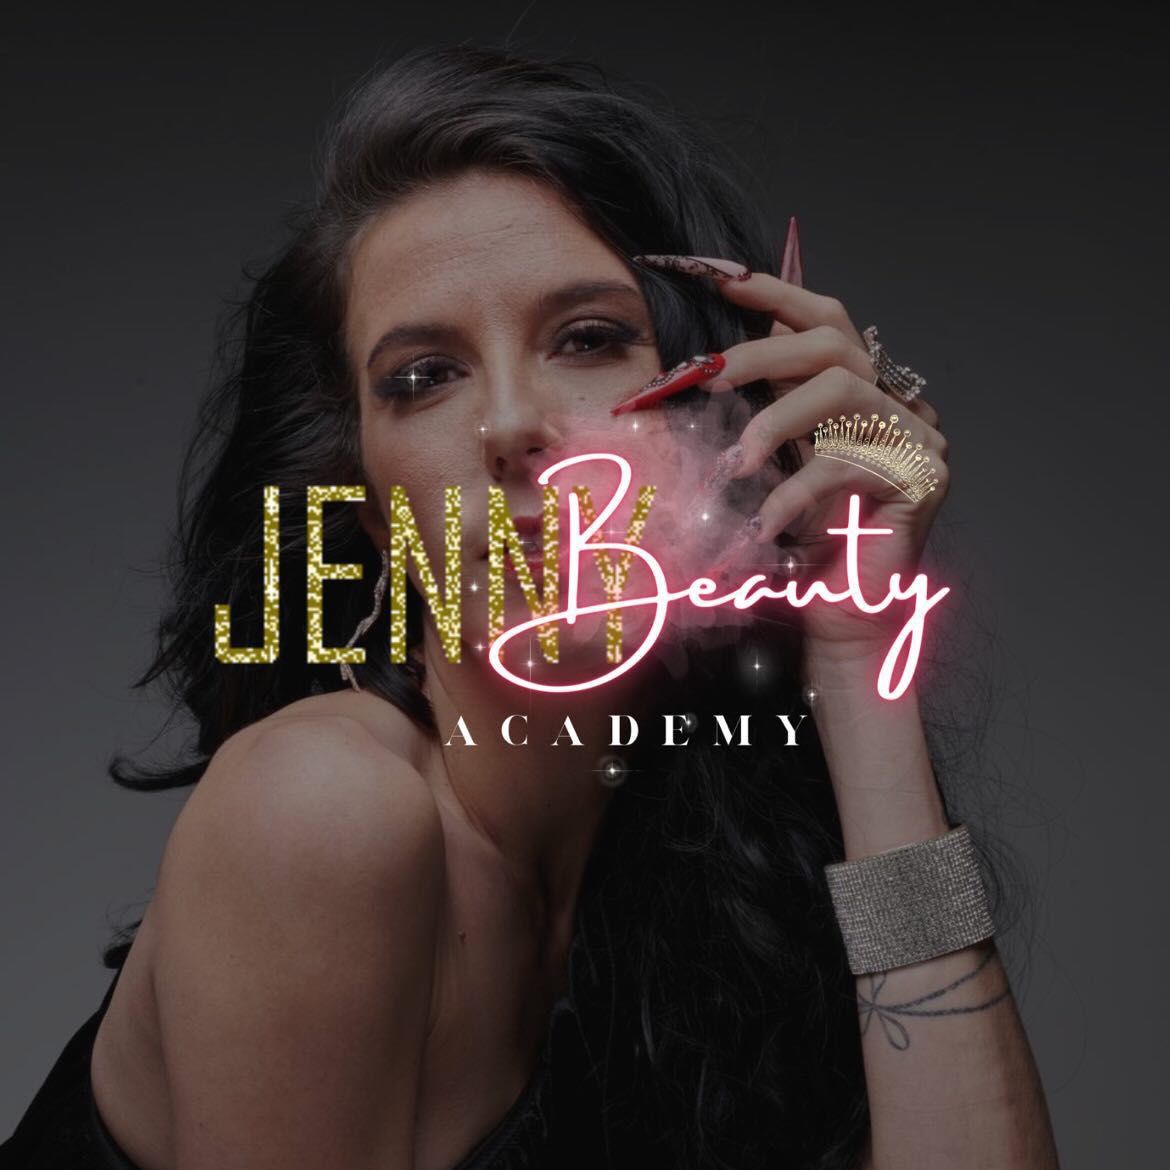 Jenny beauty academy, Allée des maçons, 06700, Saint-Laurent-du-Var